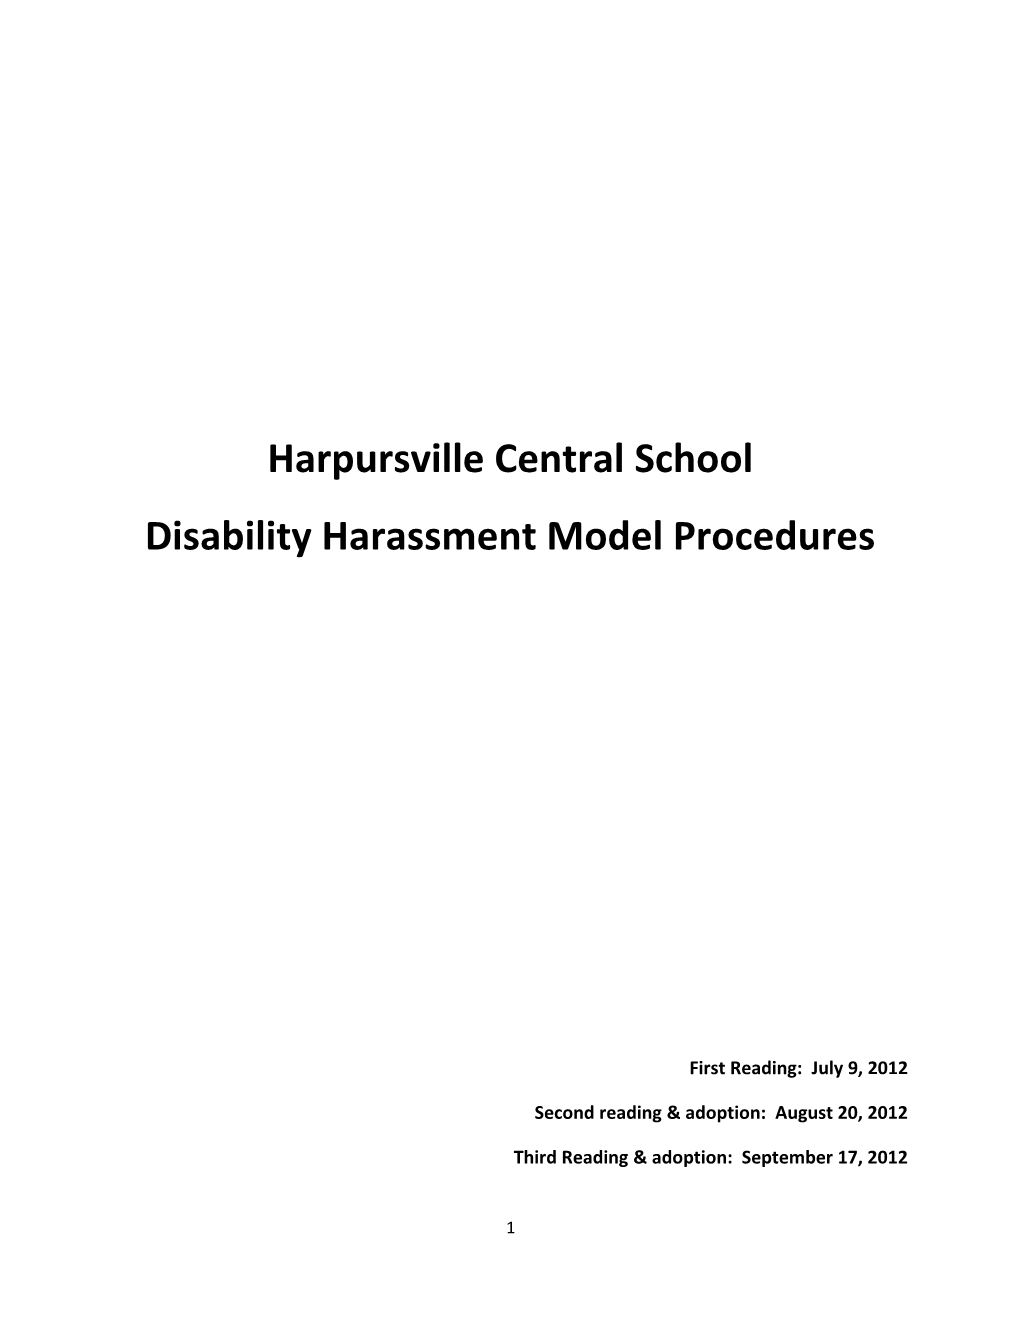 Disability Harassment Model Procedures